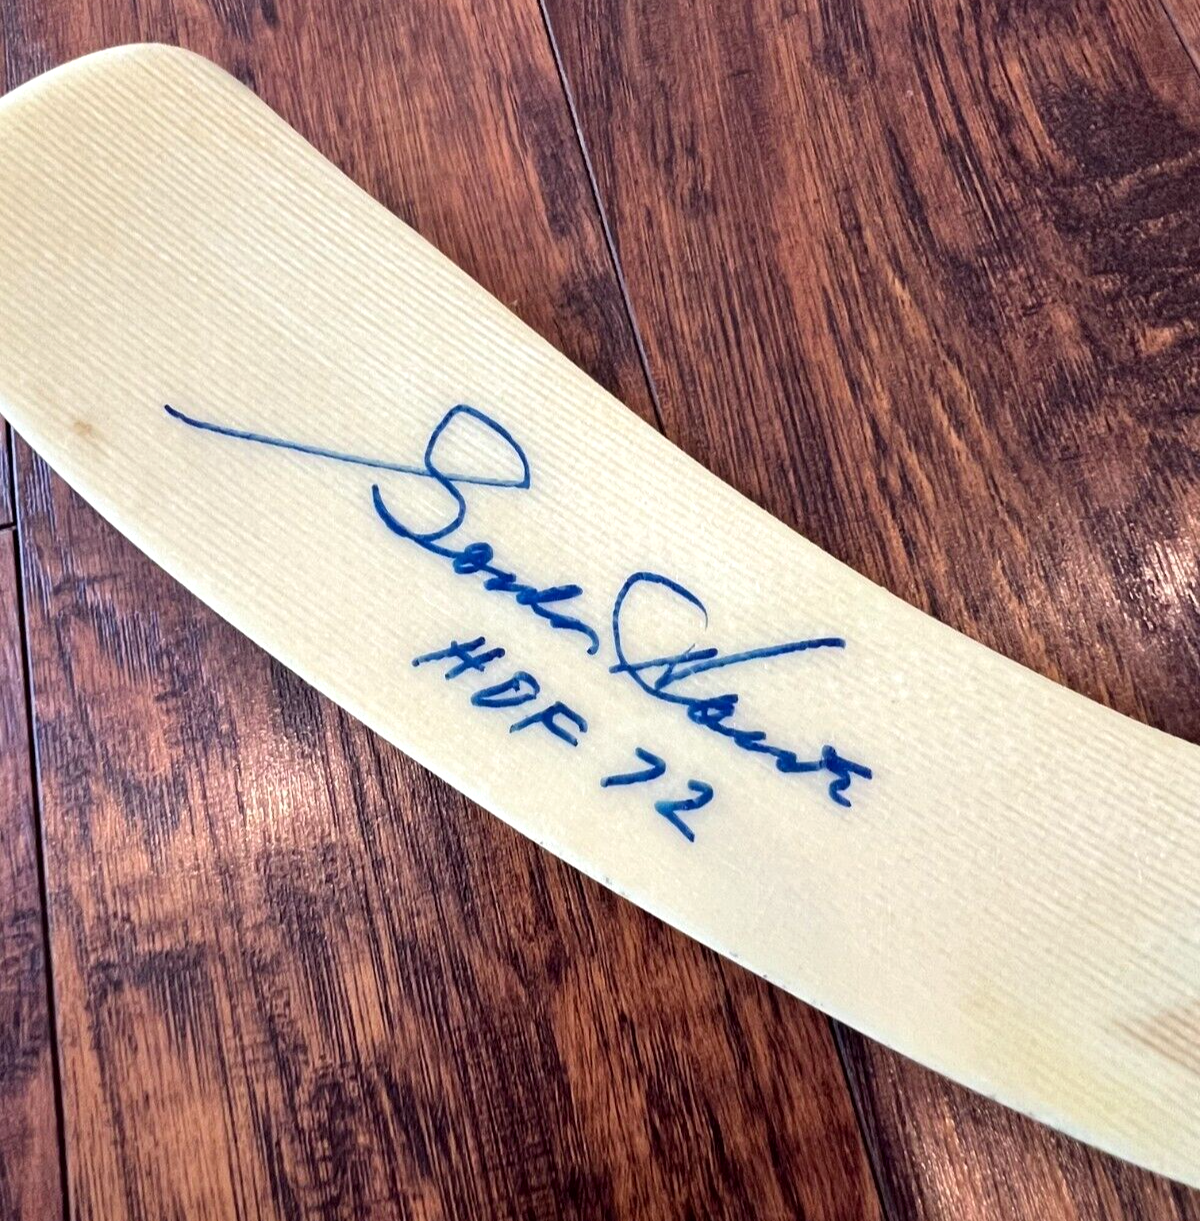 Gordie Howe HOF 1972 Inscription Signed Hockey Stick Koho Ultimate Auto JSA